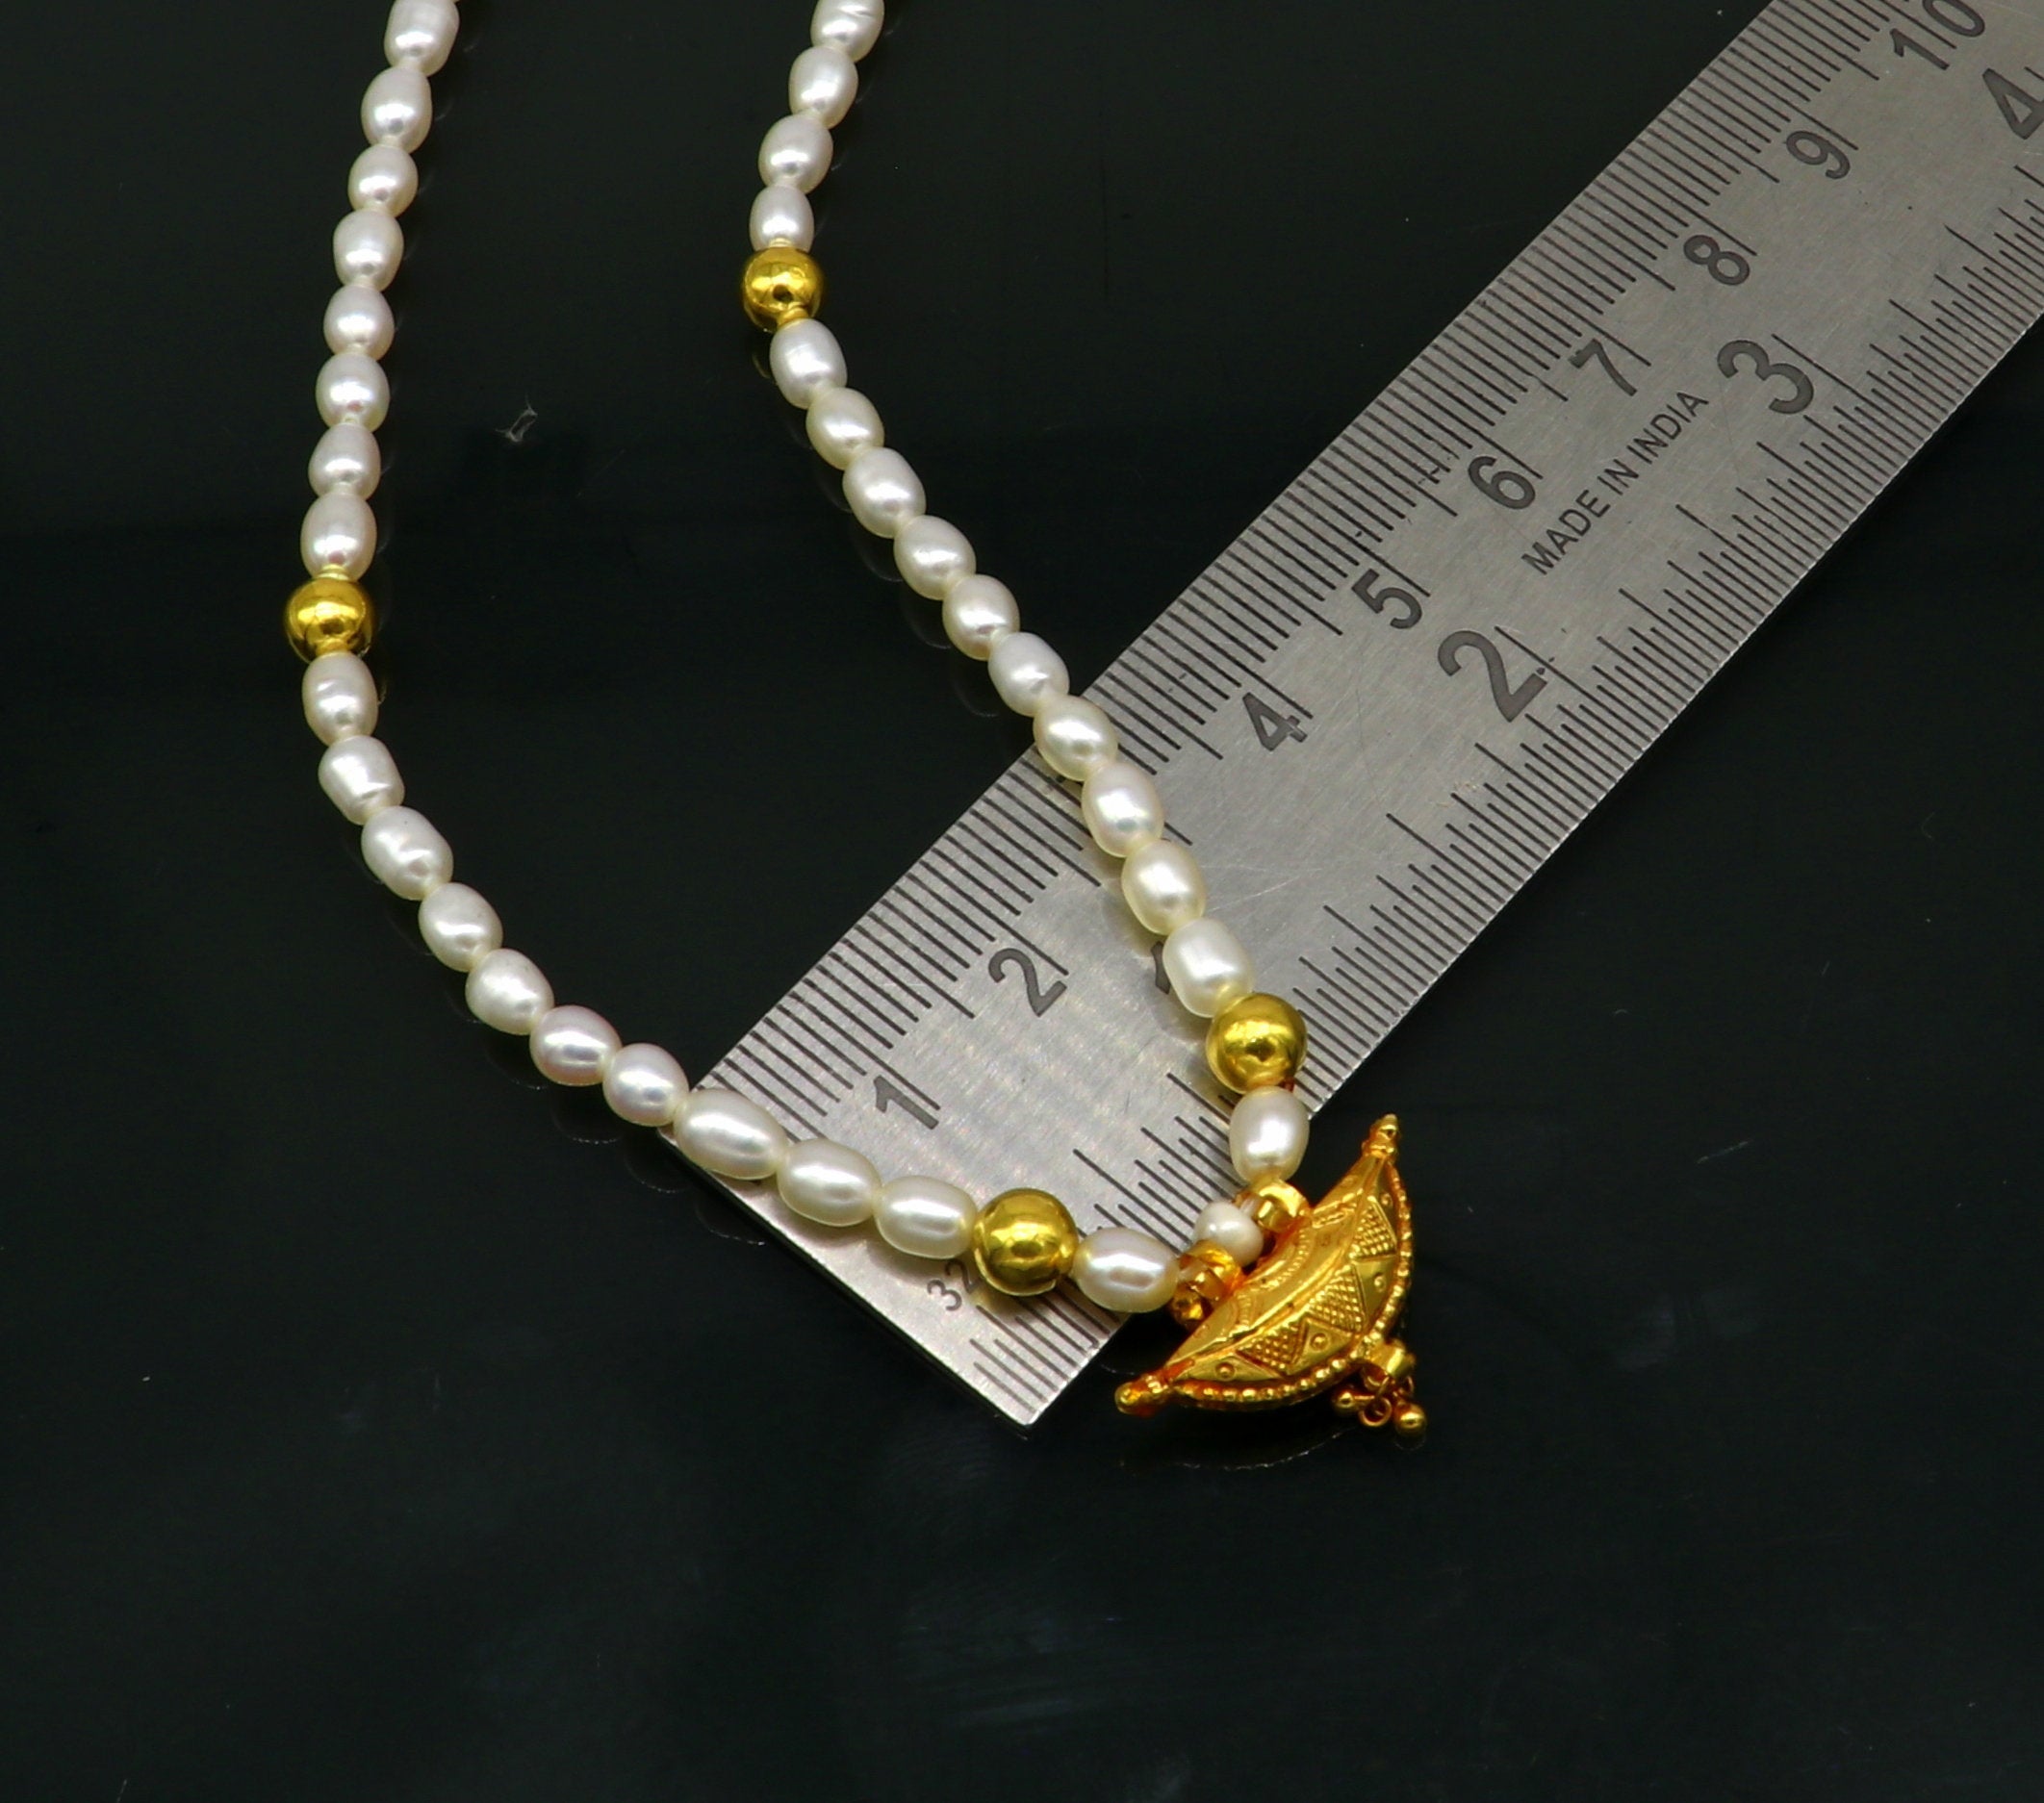 B.zero1 Necklace White gold with demi-pavé diamonds | Bulgari Official Store